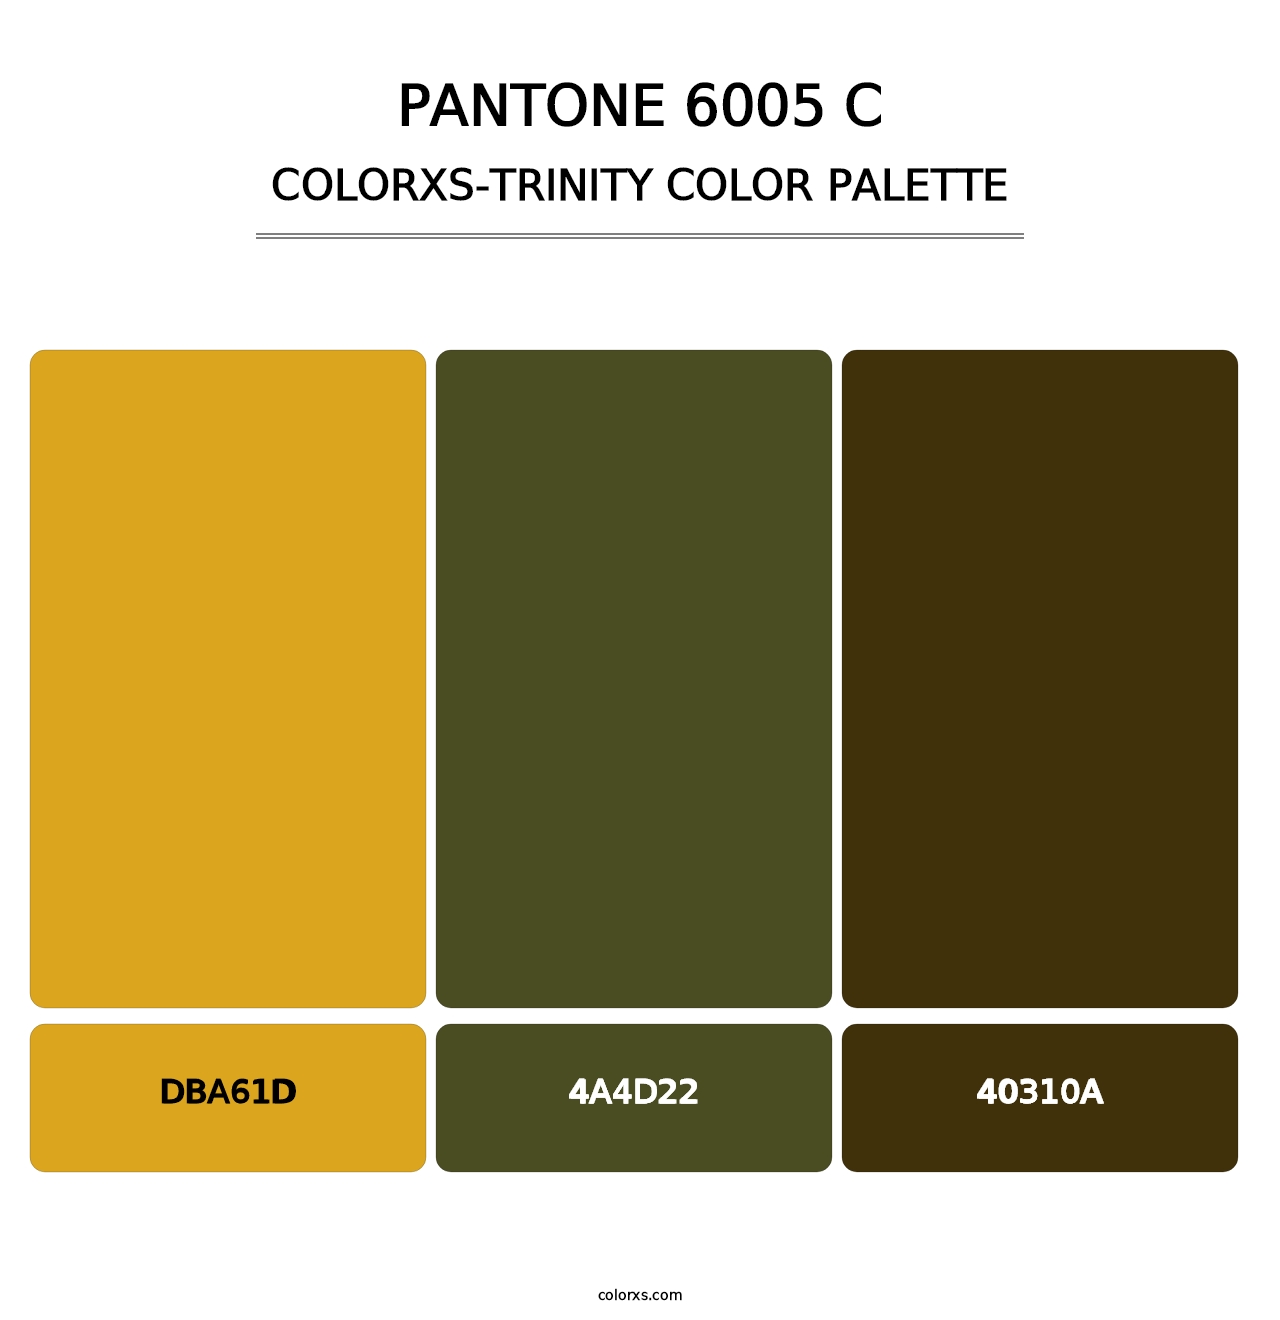 PANTONE 6005 C - Colorxs Trinity Palette